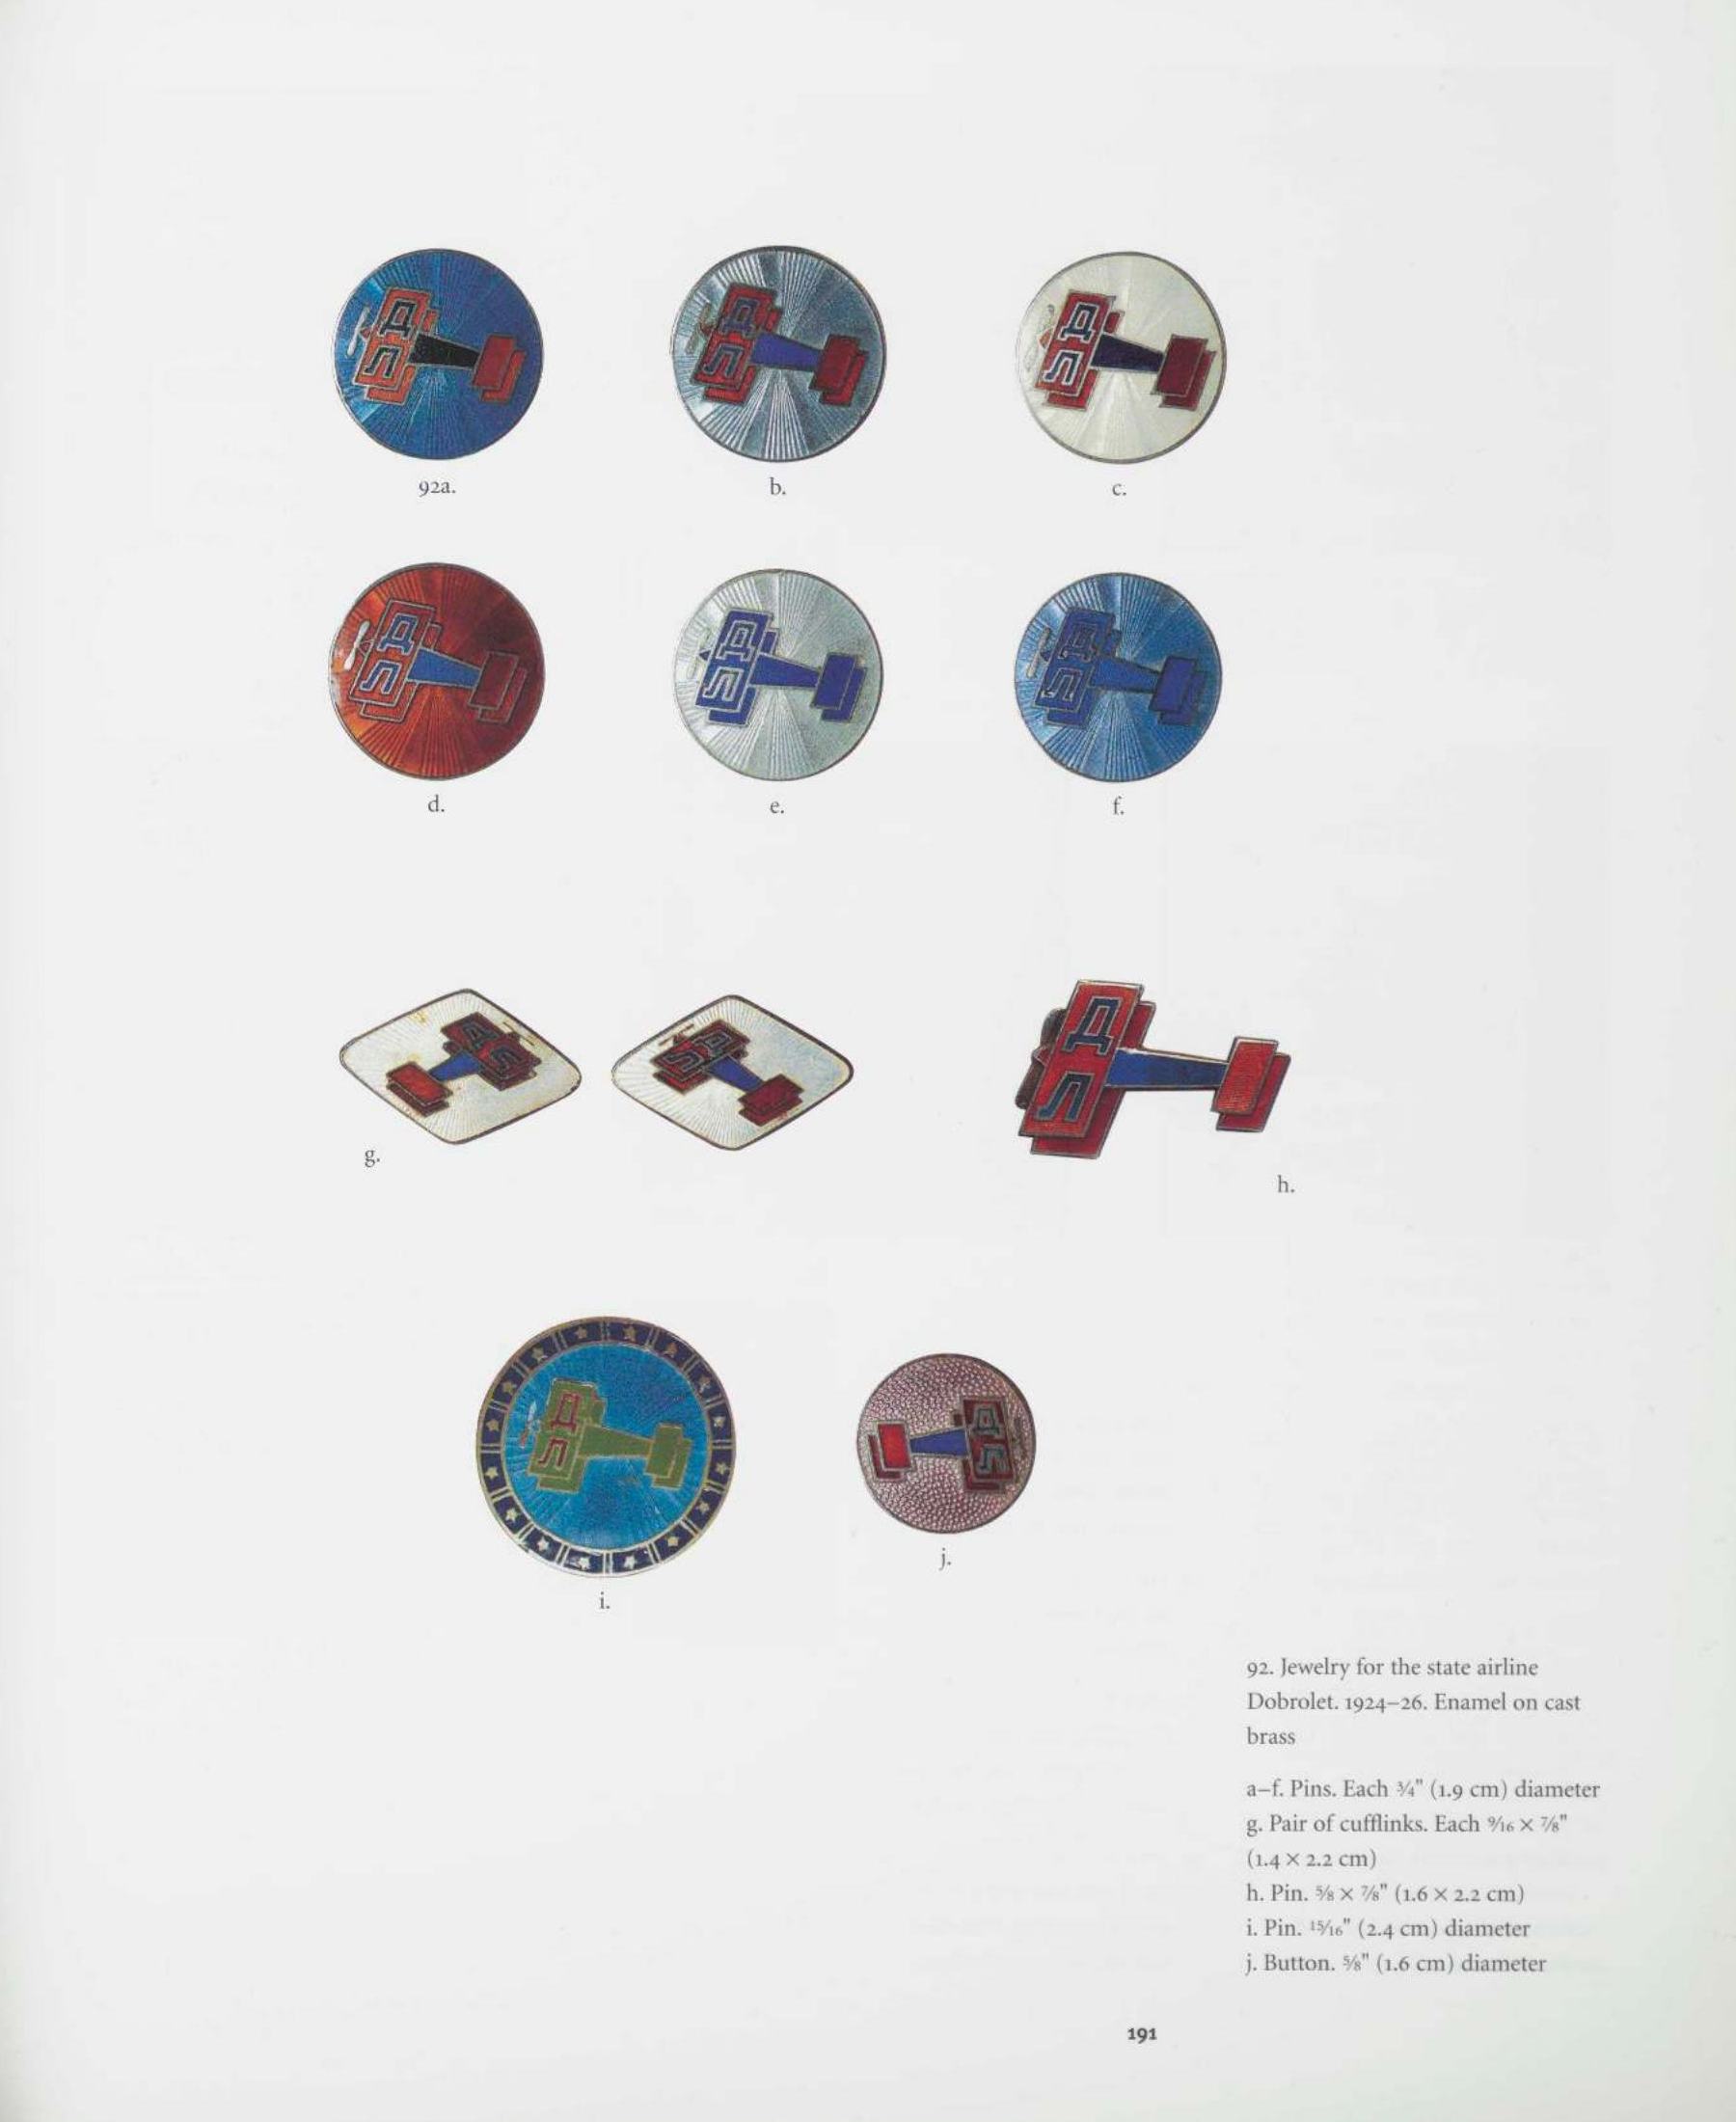 Aleksandr Rodchenko / Magdalena Dabrowski, Leah Dickerman, Peter Galassi, Aleksandr Lavrentev, Varvara Rodchenko. — New York : The Museum of Modern Art, 1998